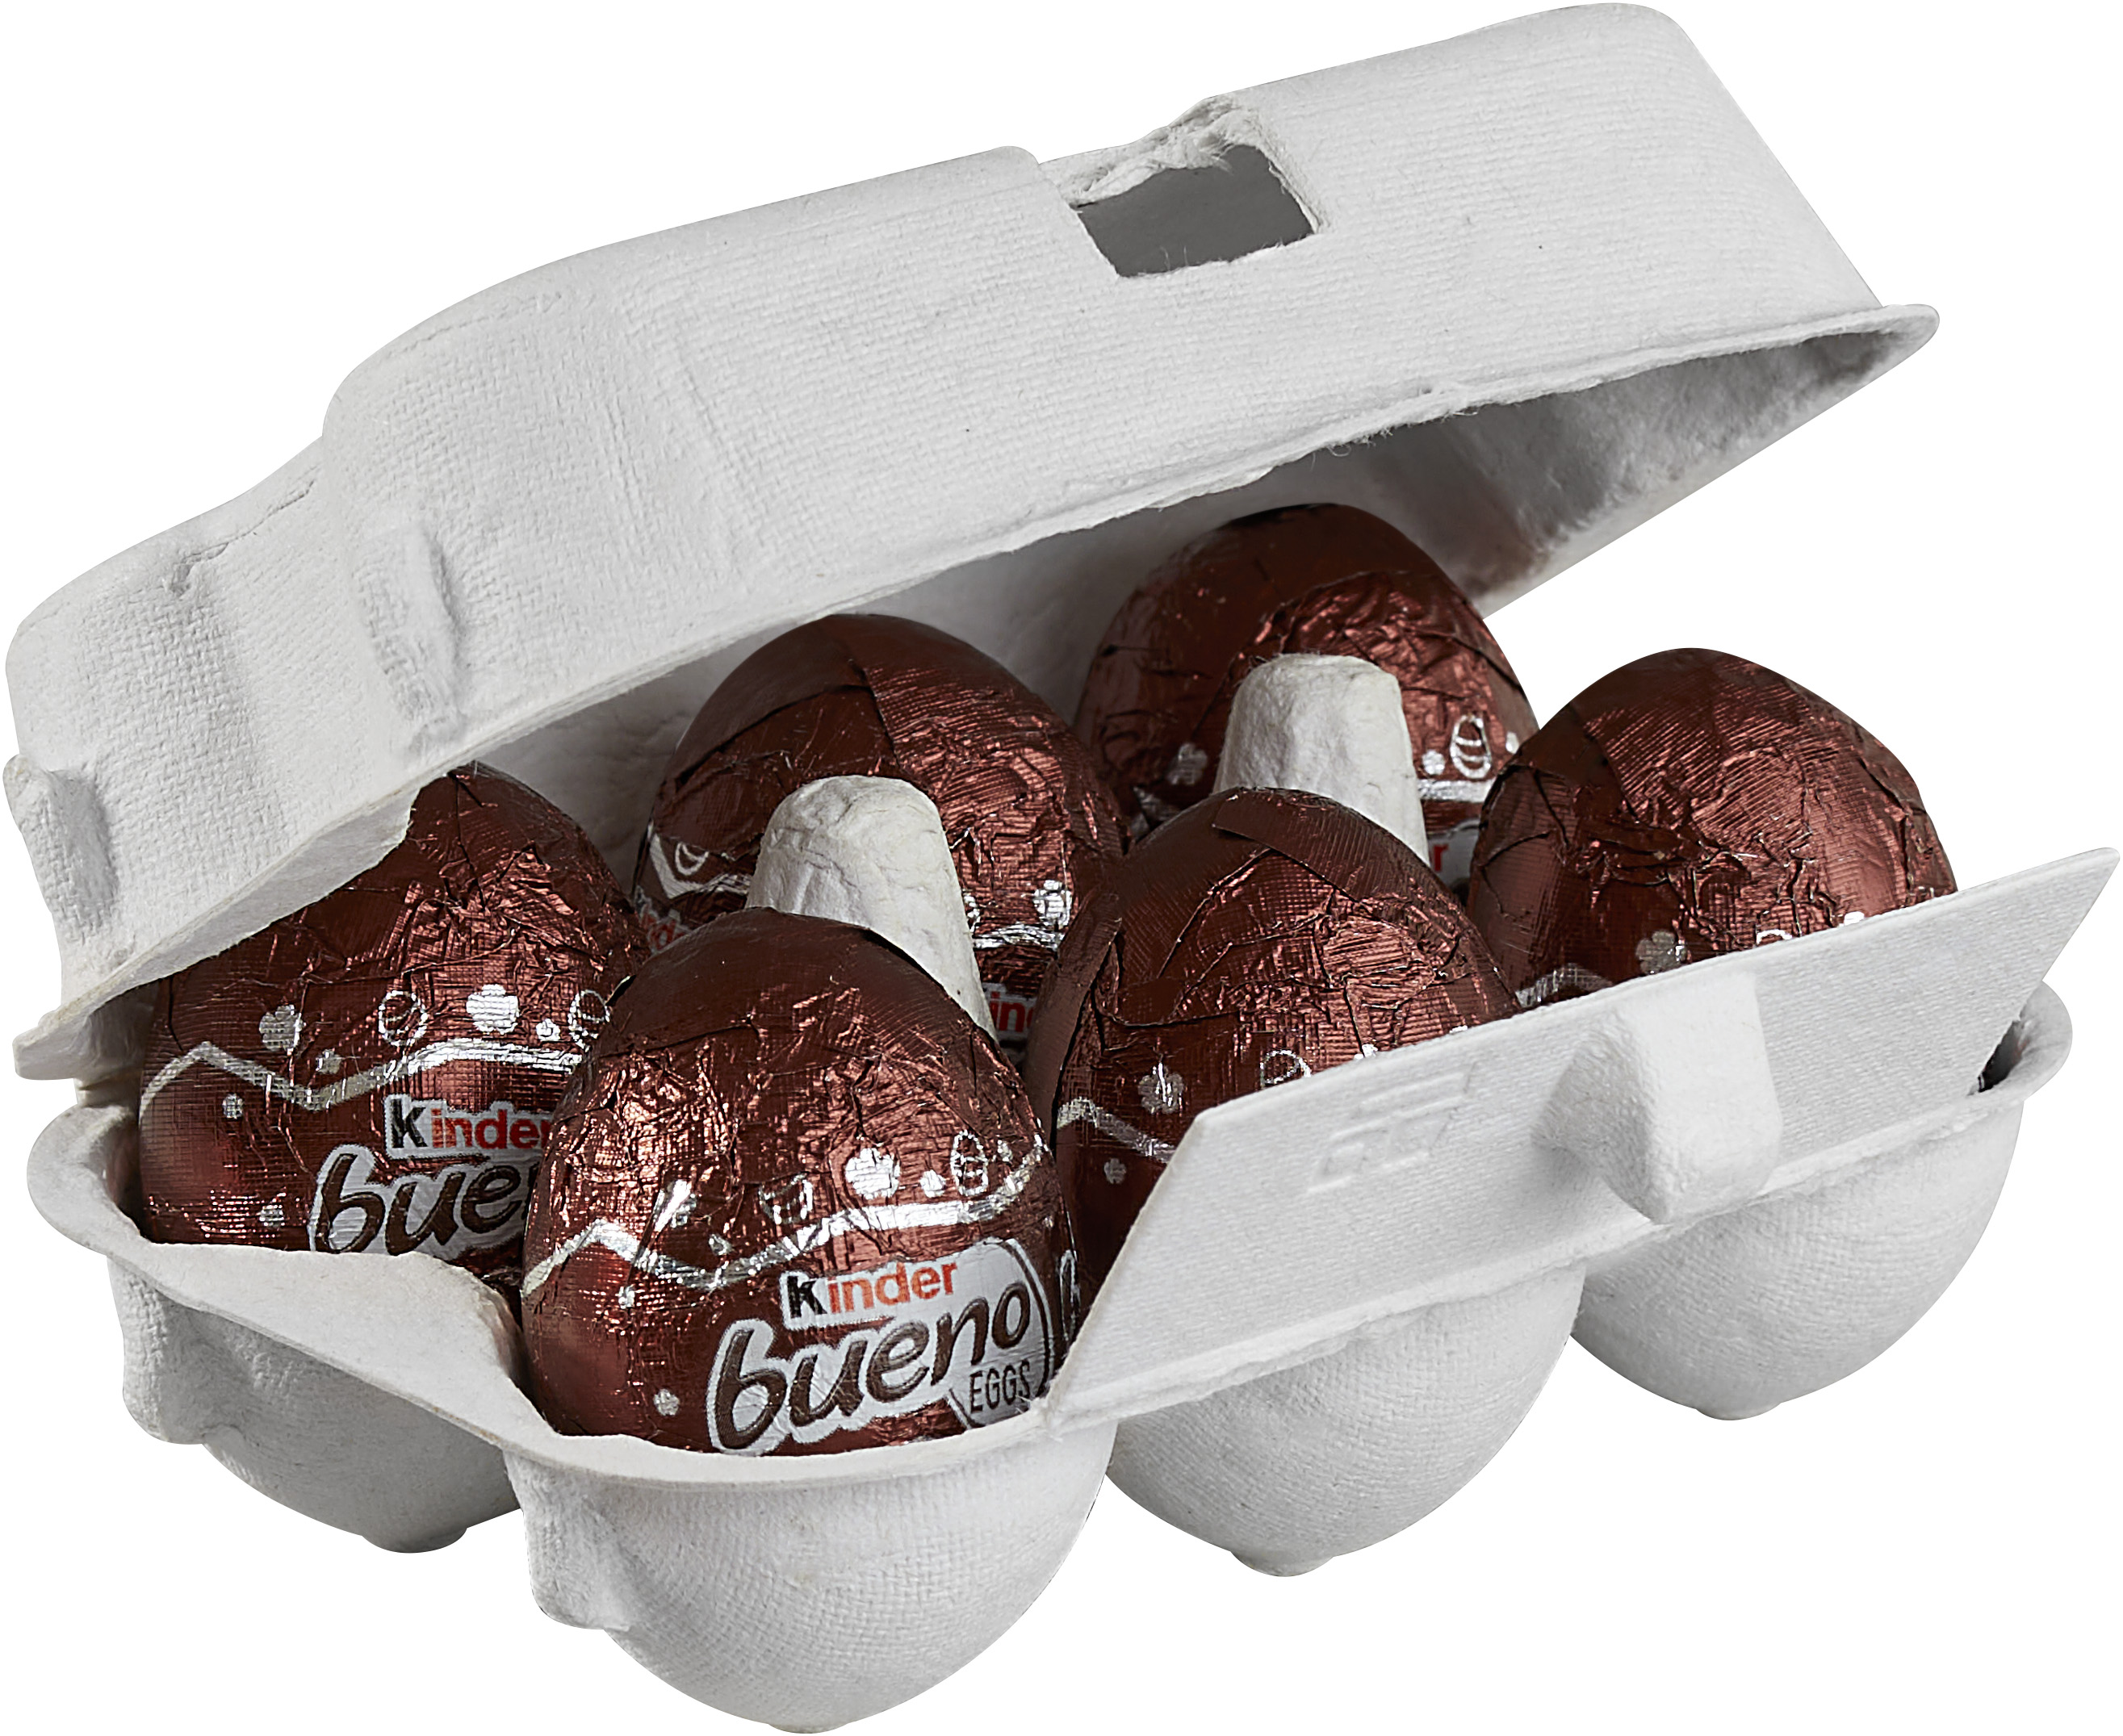 Kinder Bueno Eggs: Milk chocolate eggs filled with fine milk hazelnut cream (42%) and waffle (5%)